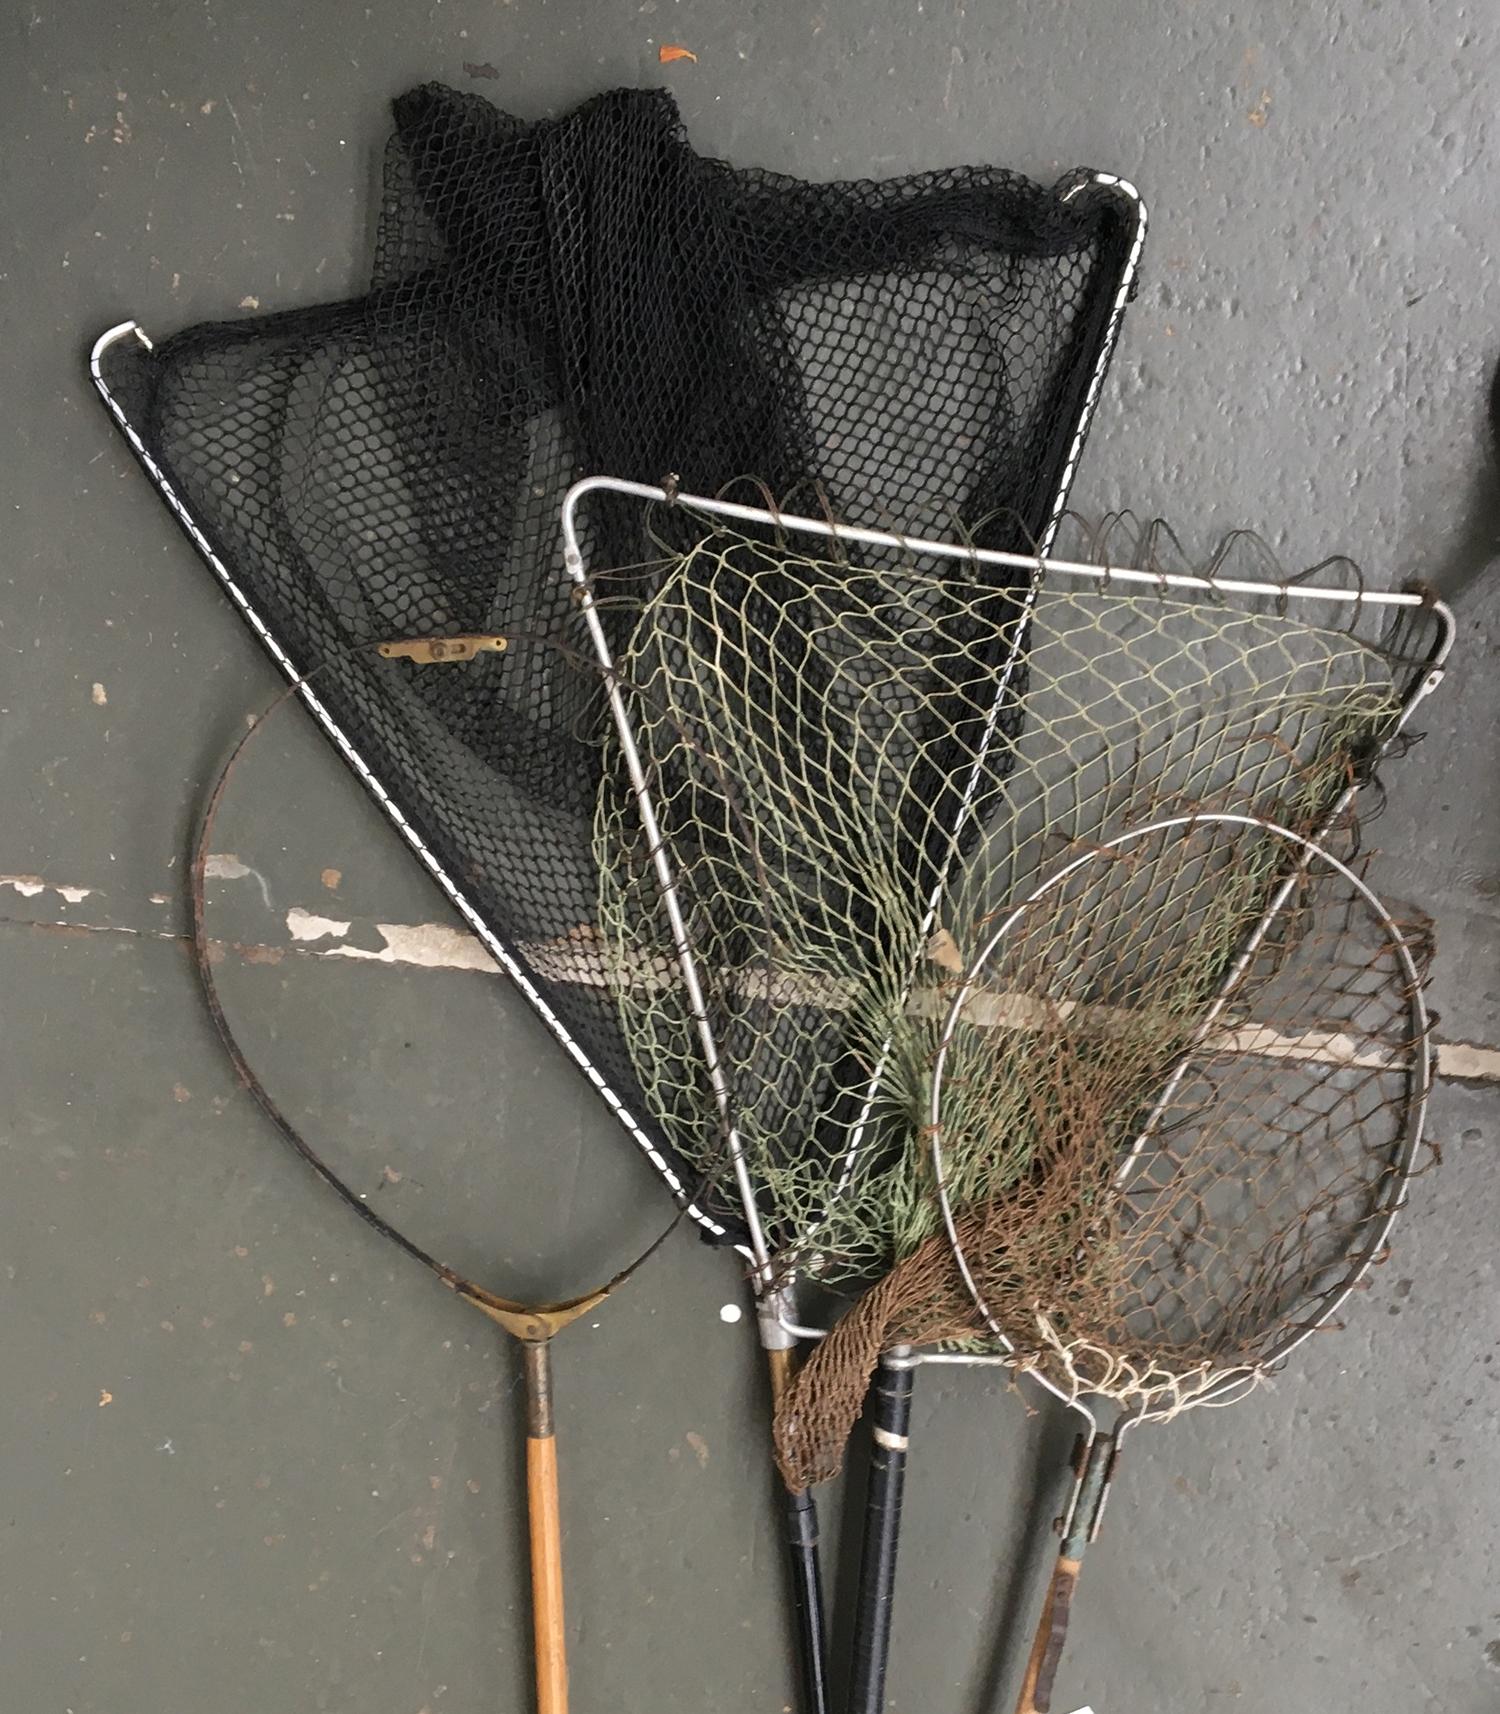 Four vintage landing nets